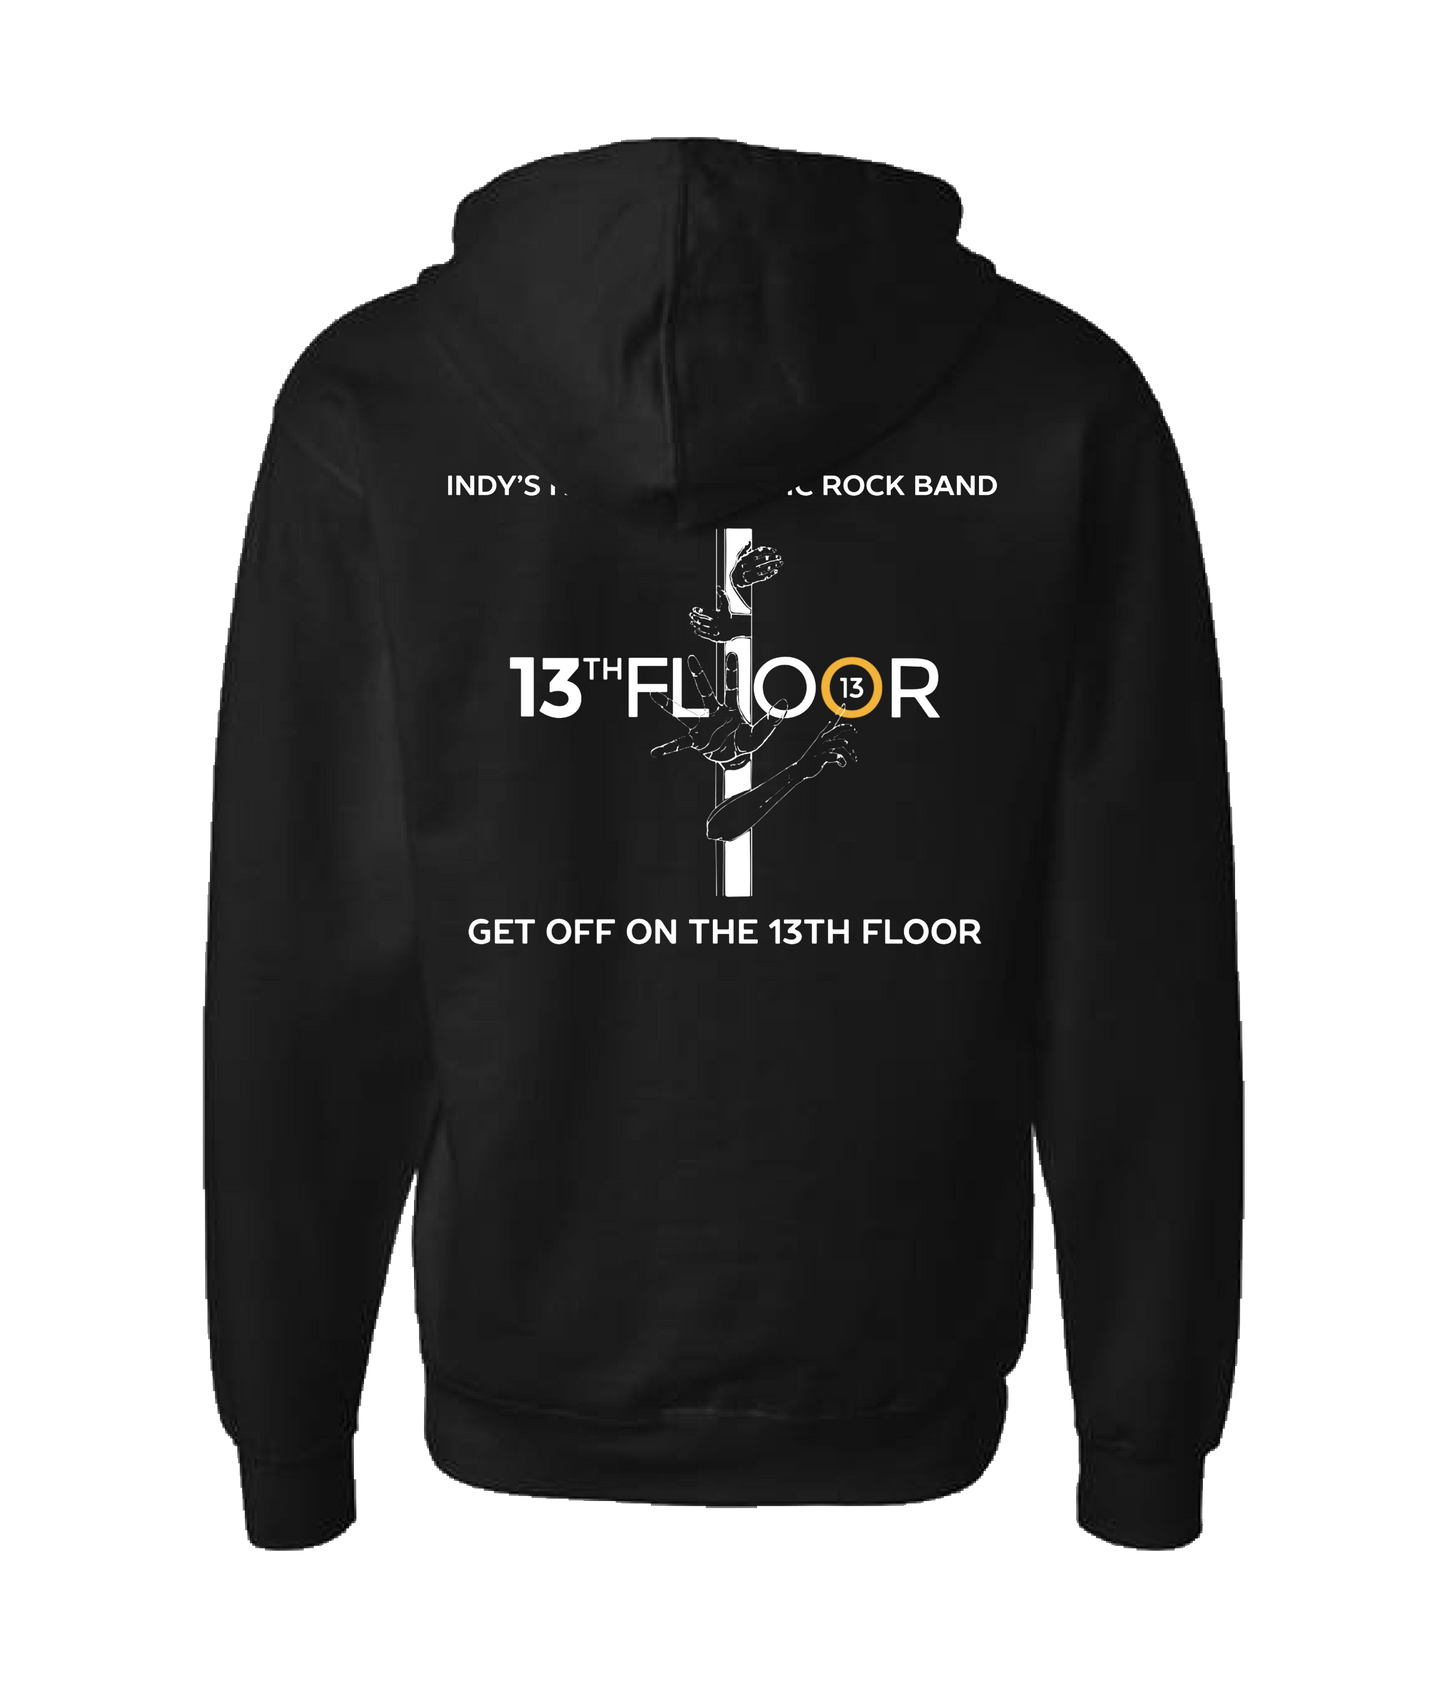 13th Floor Band Indy - Get Off on the 13th Floor - Black Zip Up Hoodie